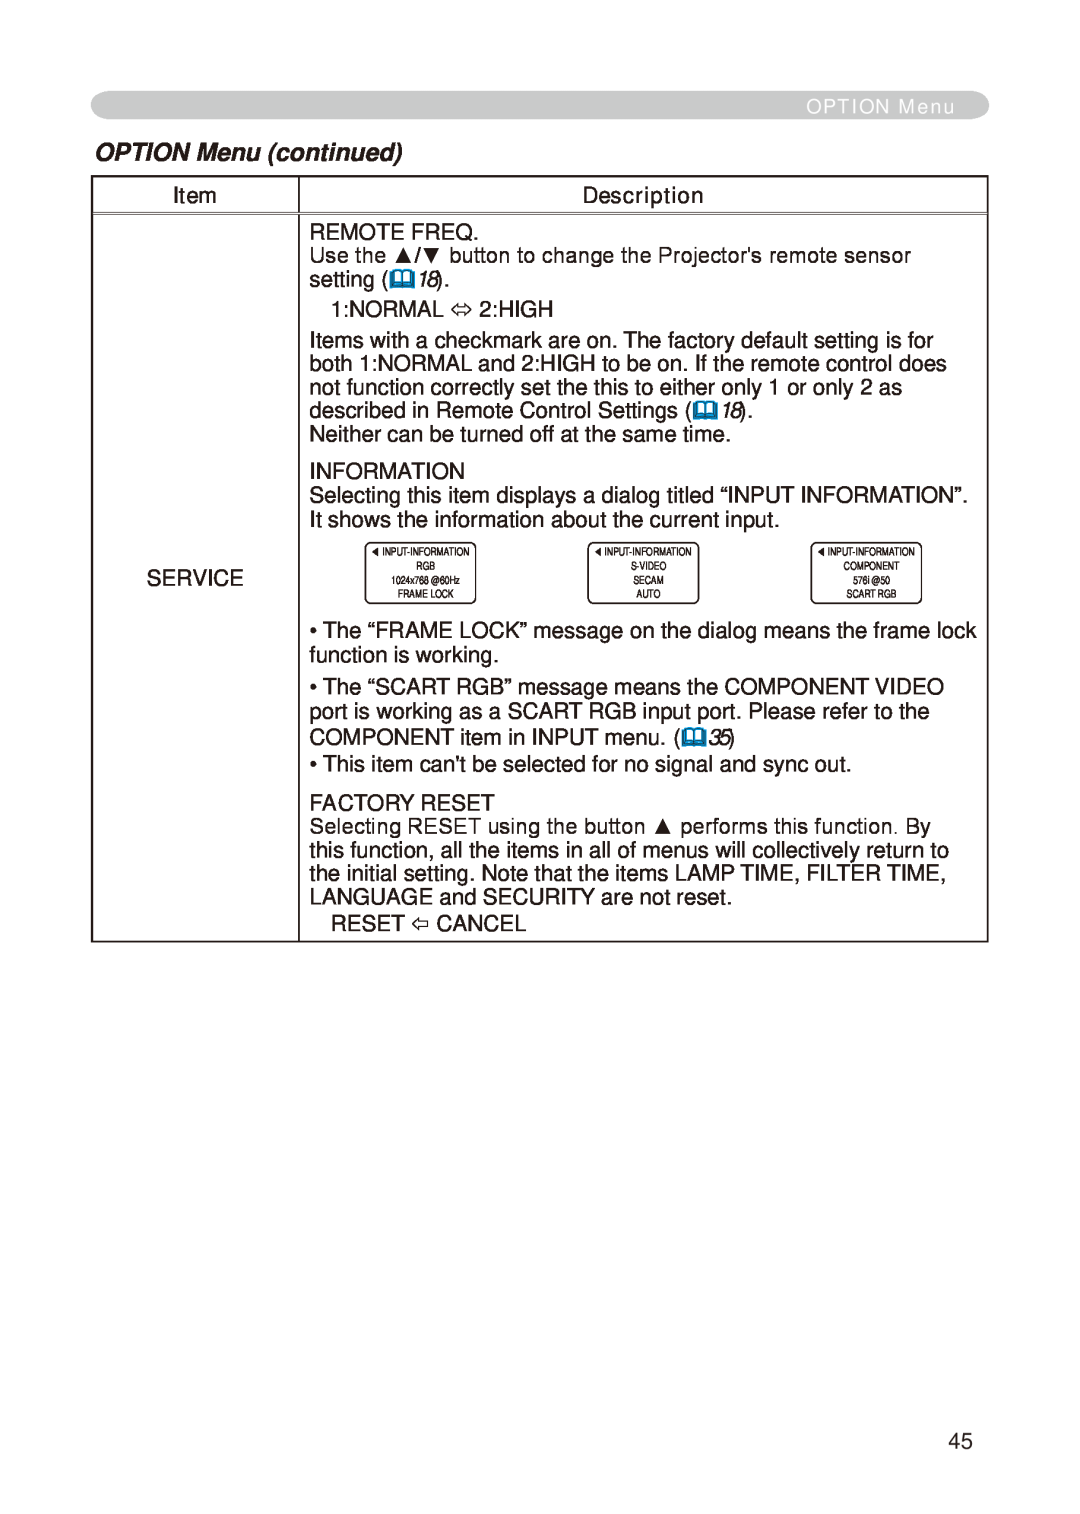 Hitachi CP-X268A user manual OPTION Menu continued, Description, Remote Freq, Information, Service, Factory Reset 